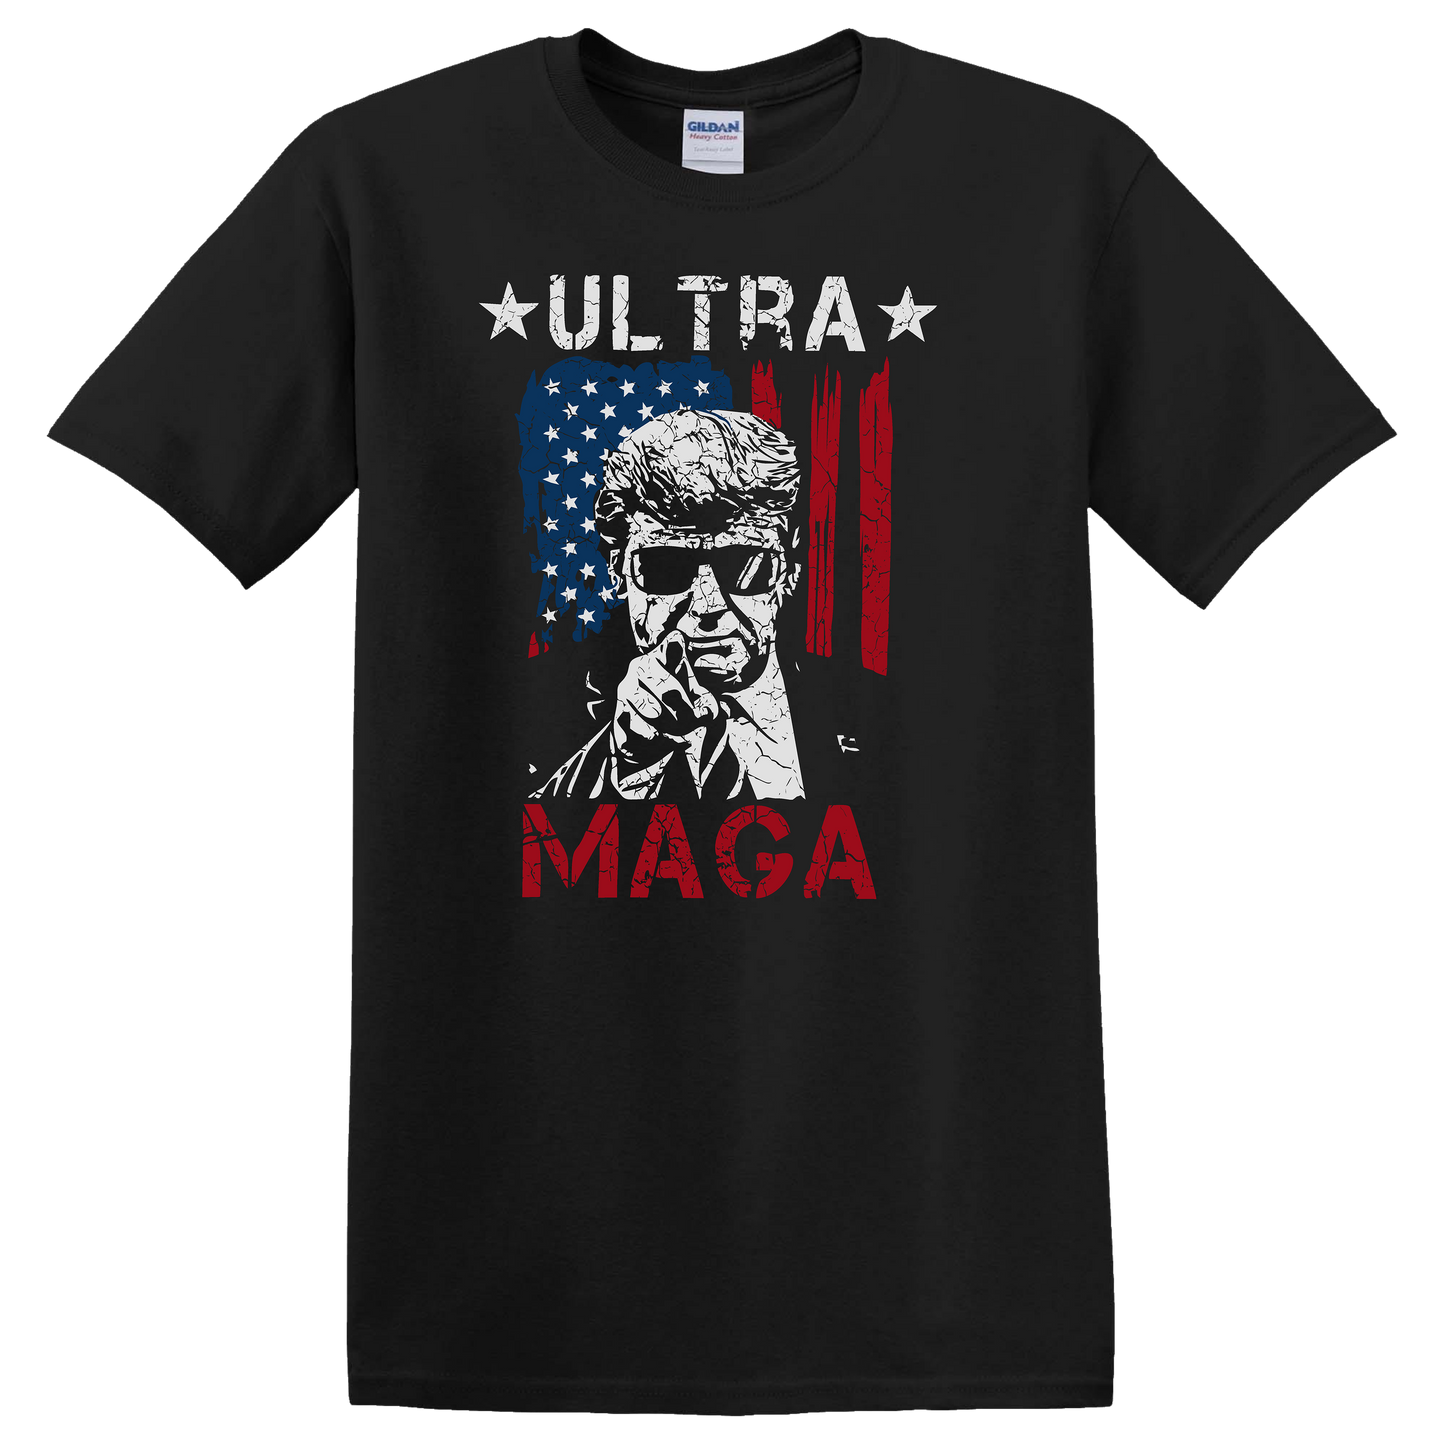 Ultra MAGA Trump T-Shirt